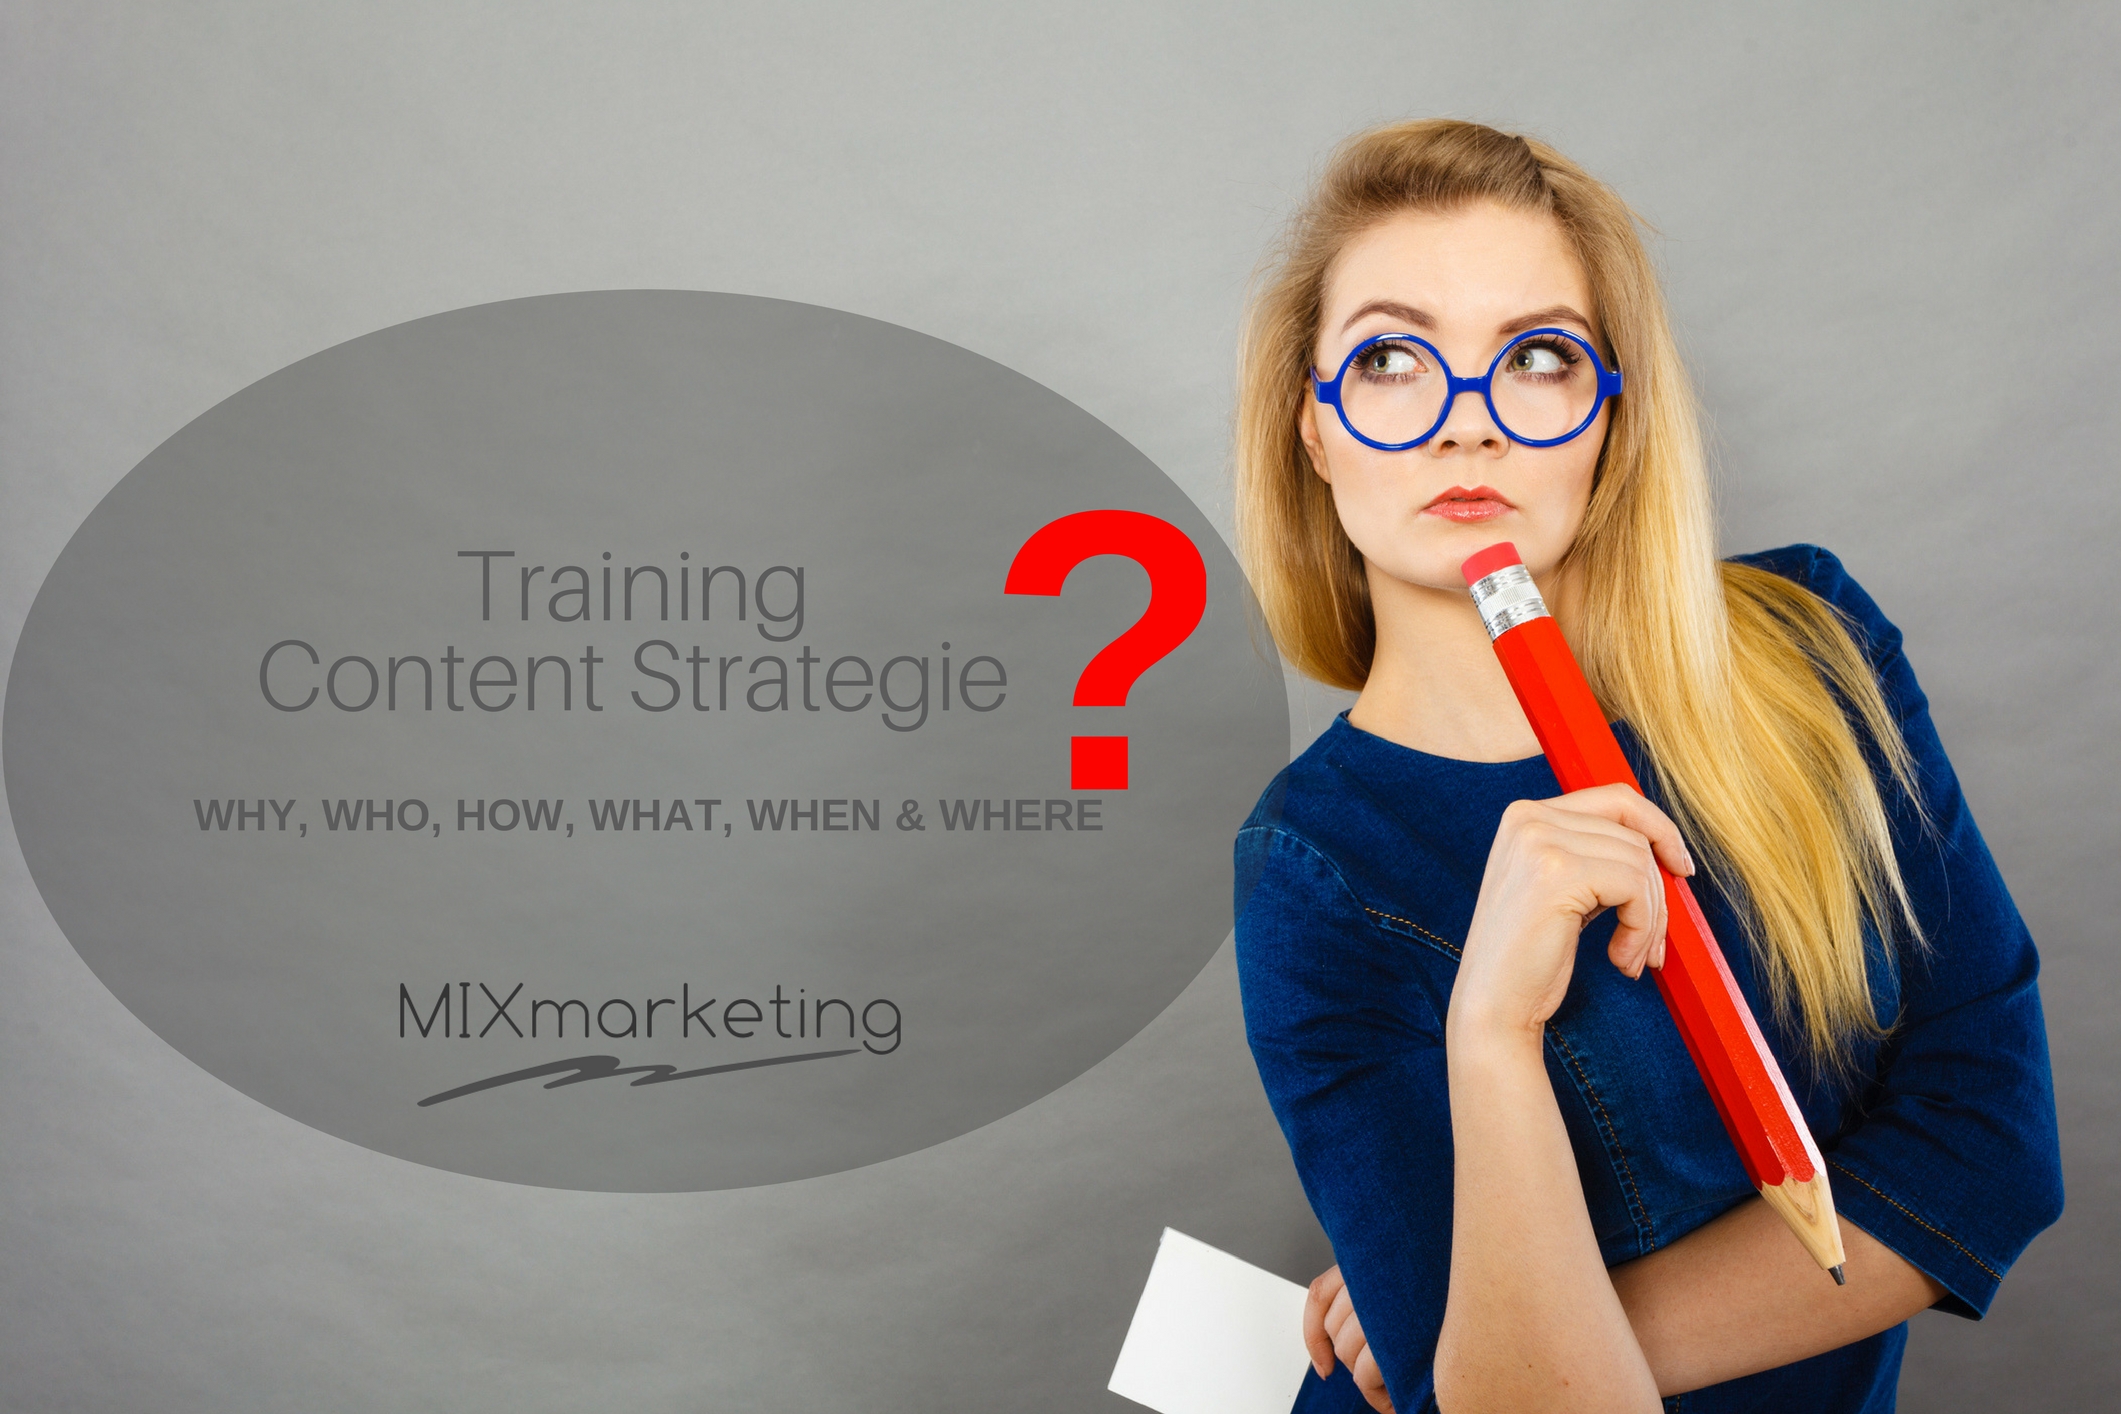 MIXmarketing Content Strategie Training